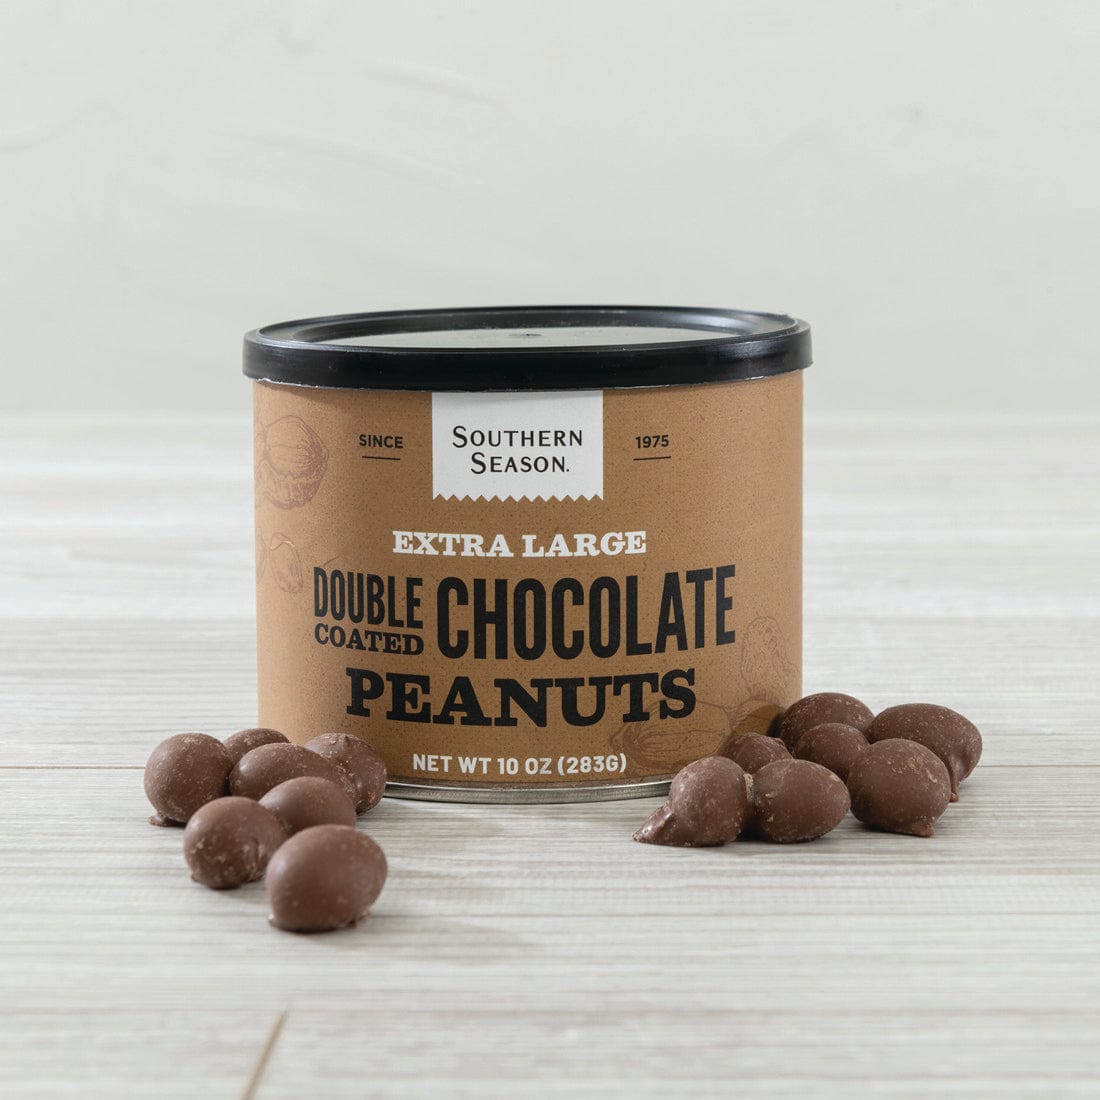 Southern Season Southern Season Double Coated Chocolate Peanuts 10 oz